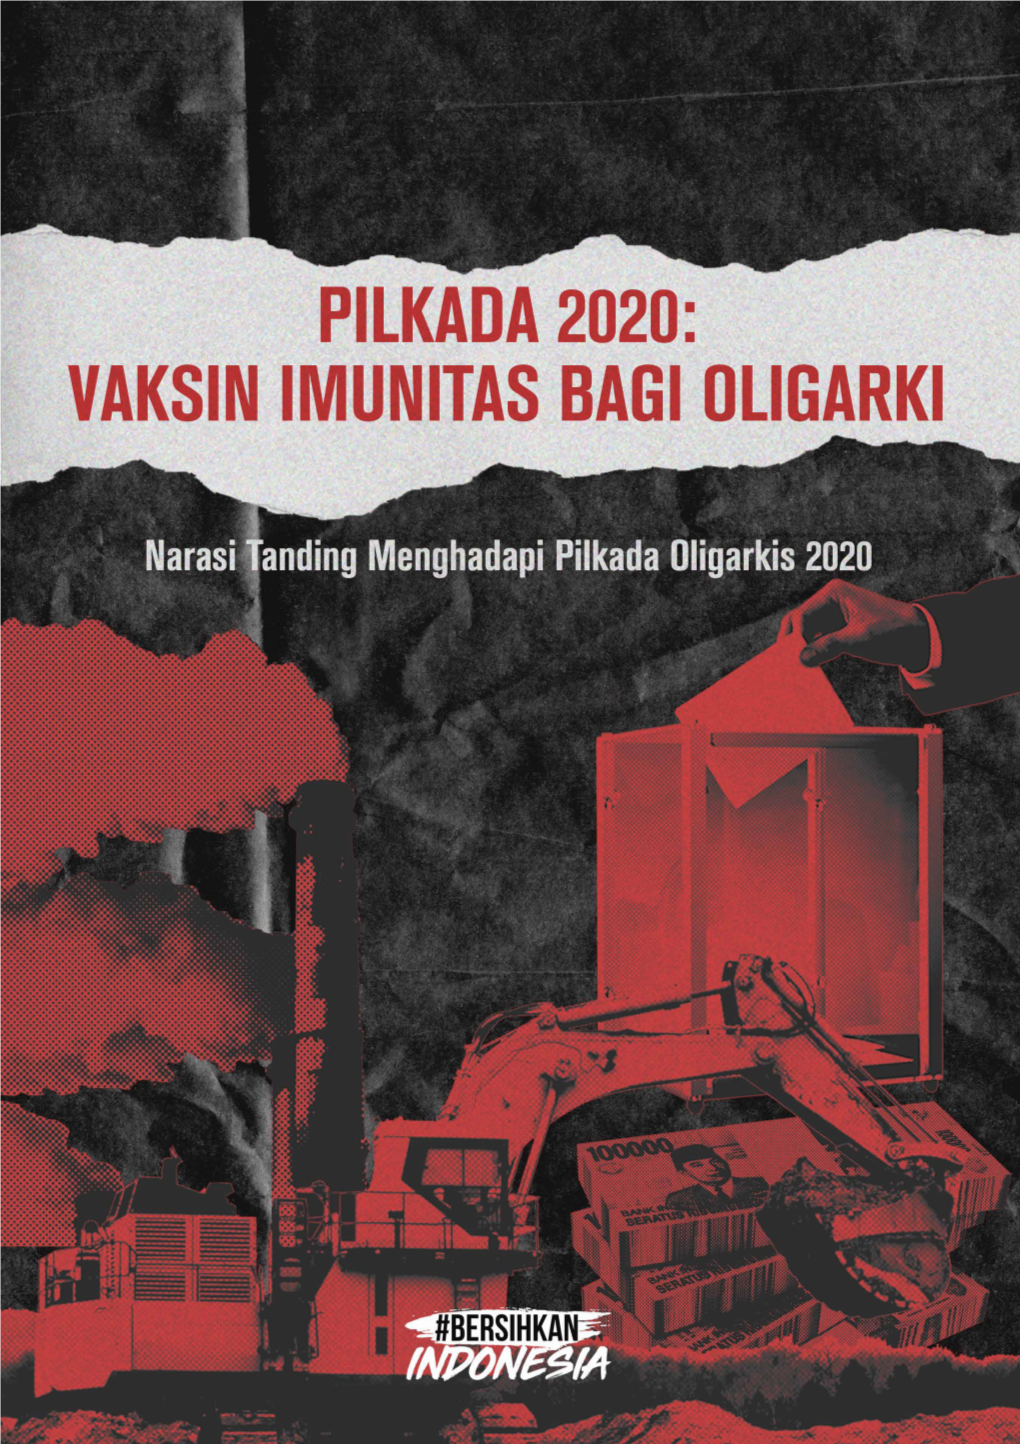 POTRET OLIGARKI PILKADA 2020 Kalimantan Selatan